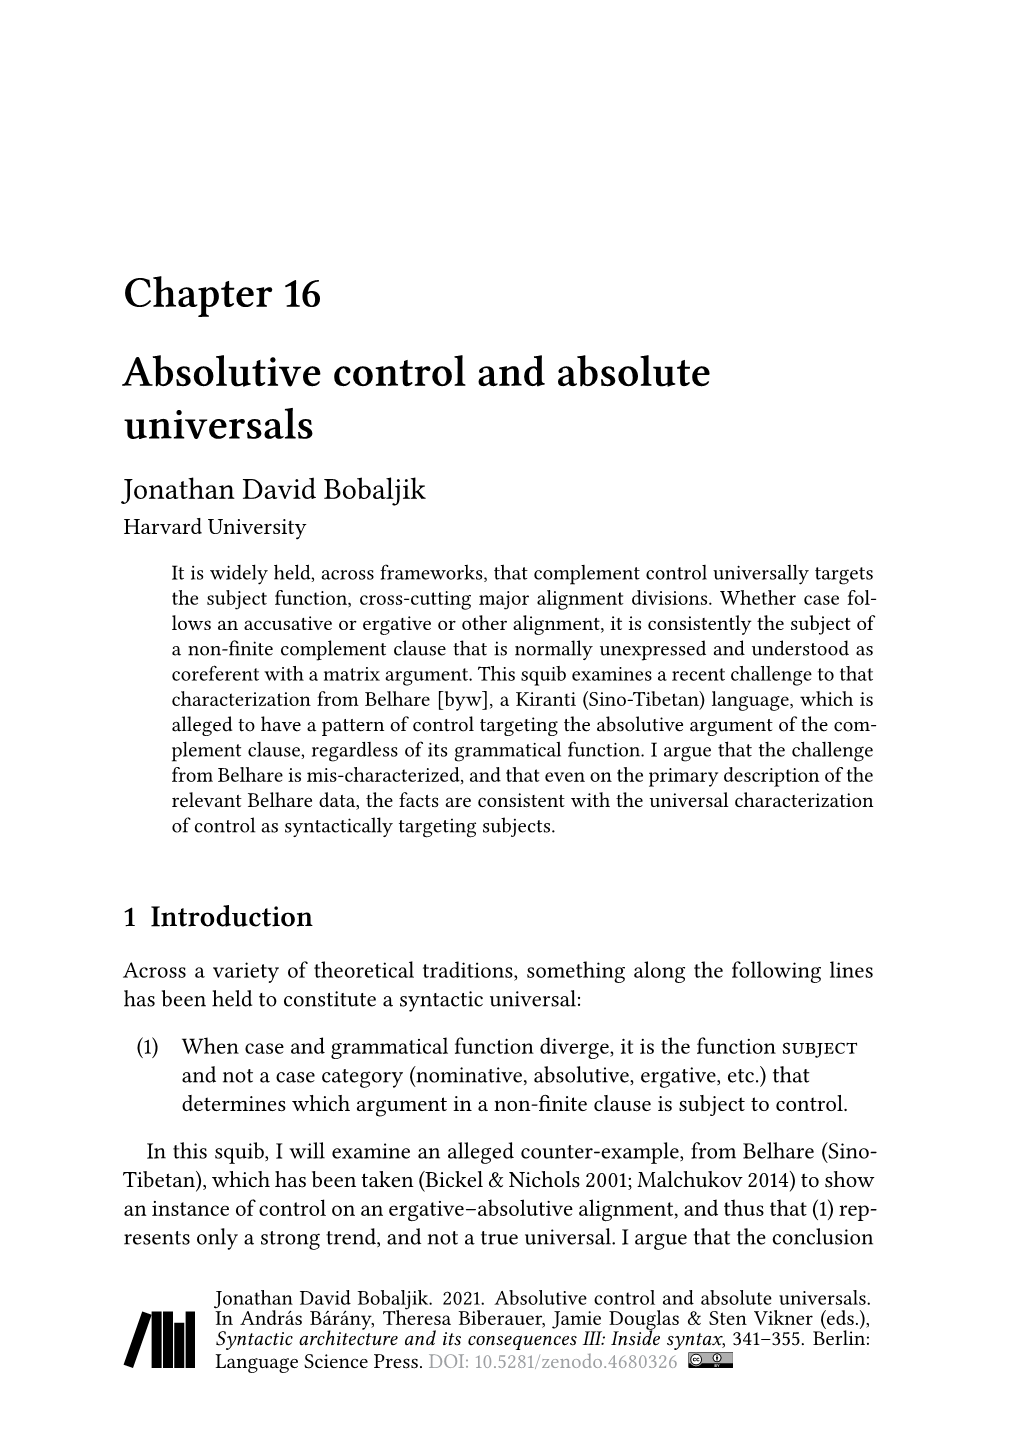 Chapter 16 Absolutive Control and Absolute Universals Jonathan David Bobaljik Harvard University